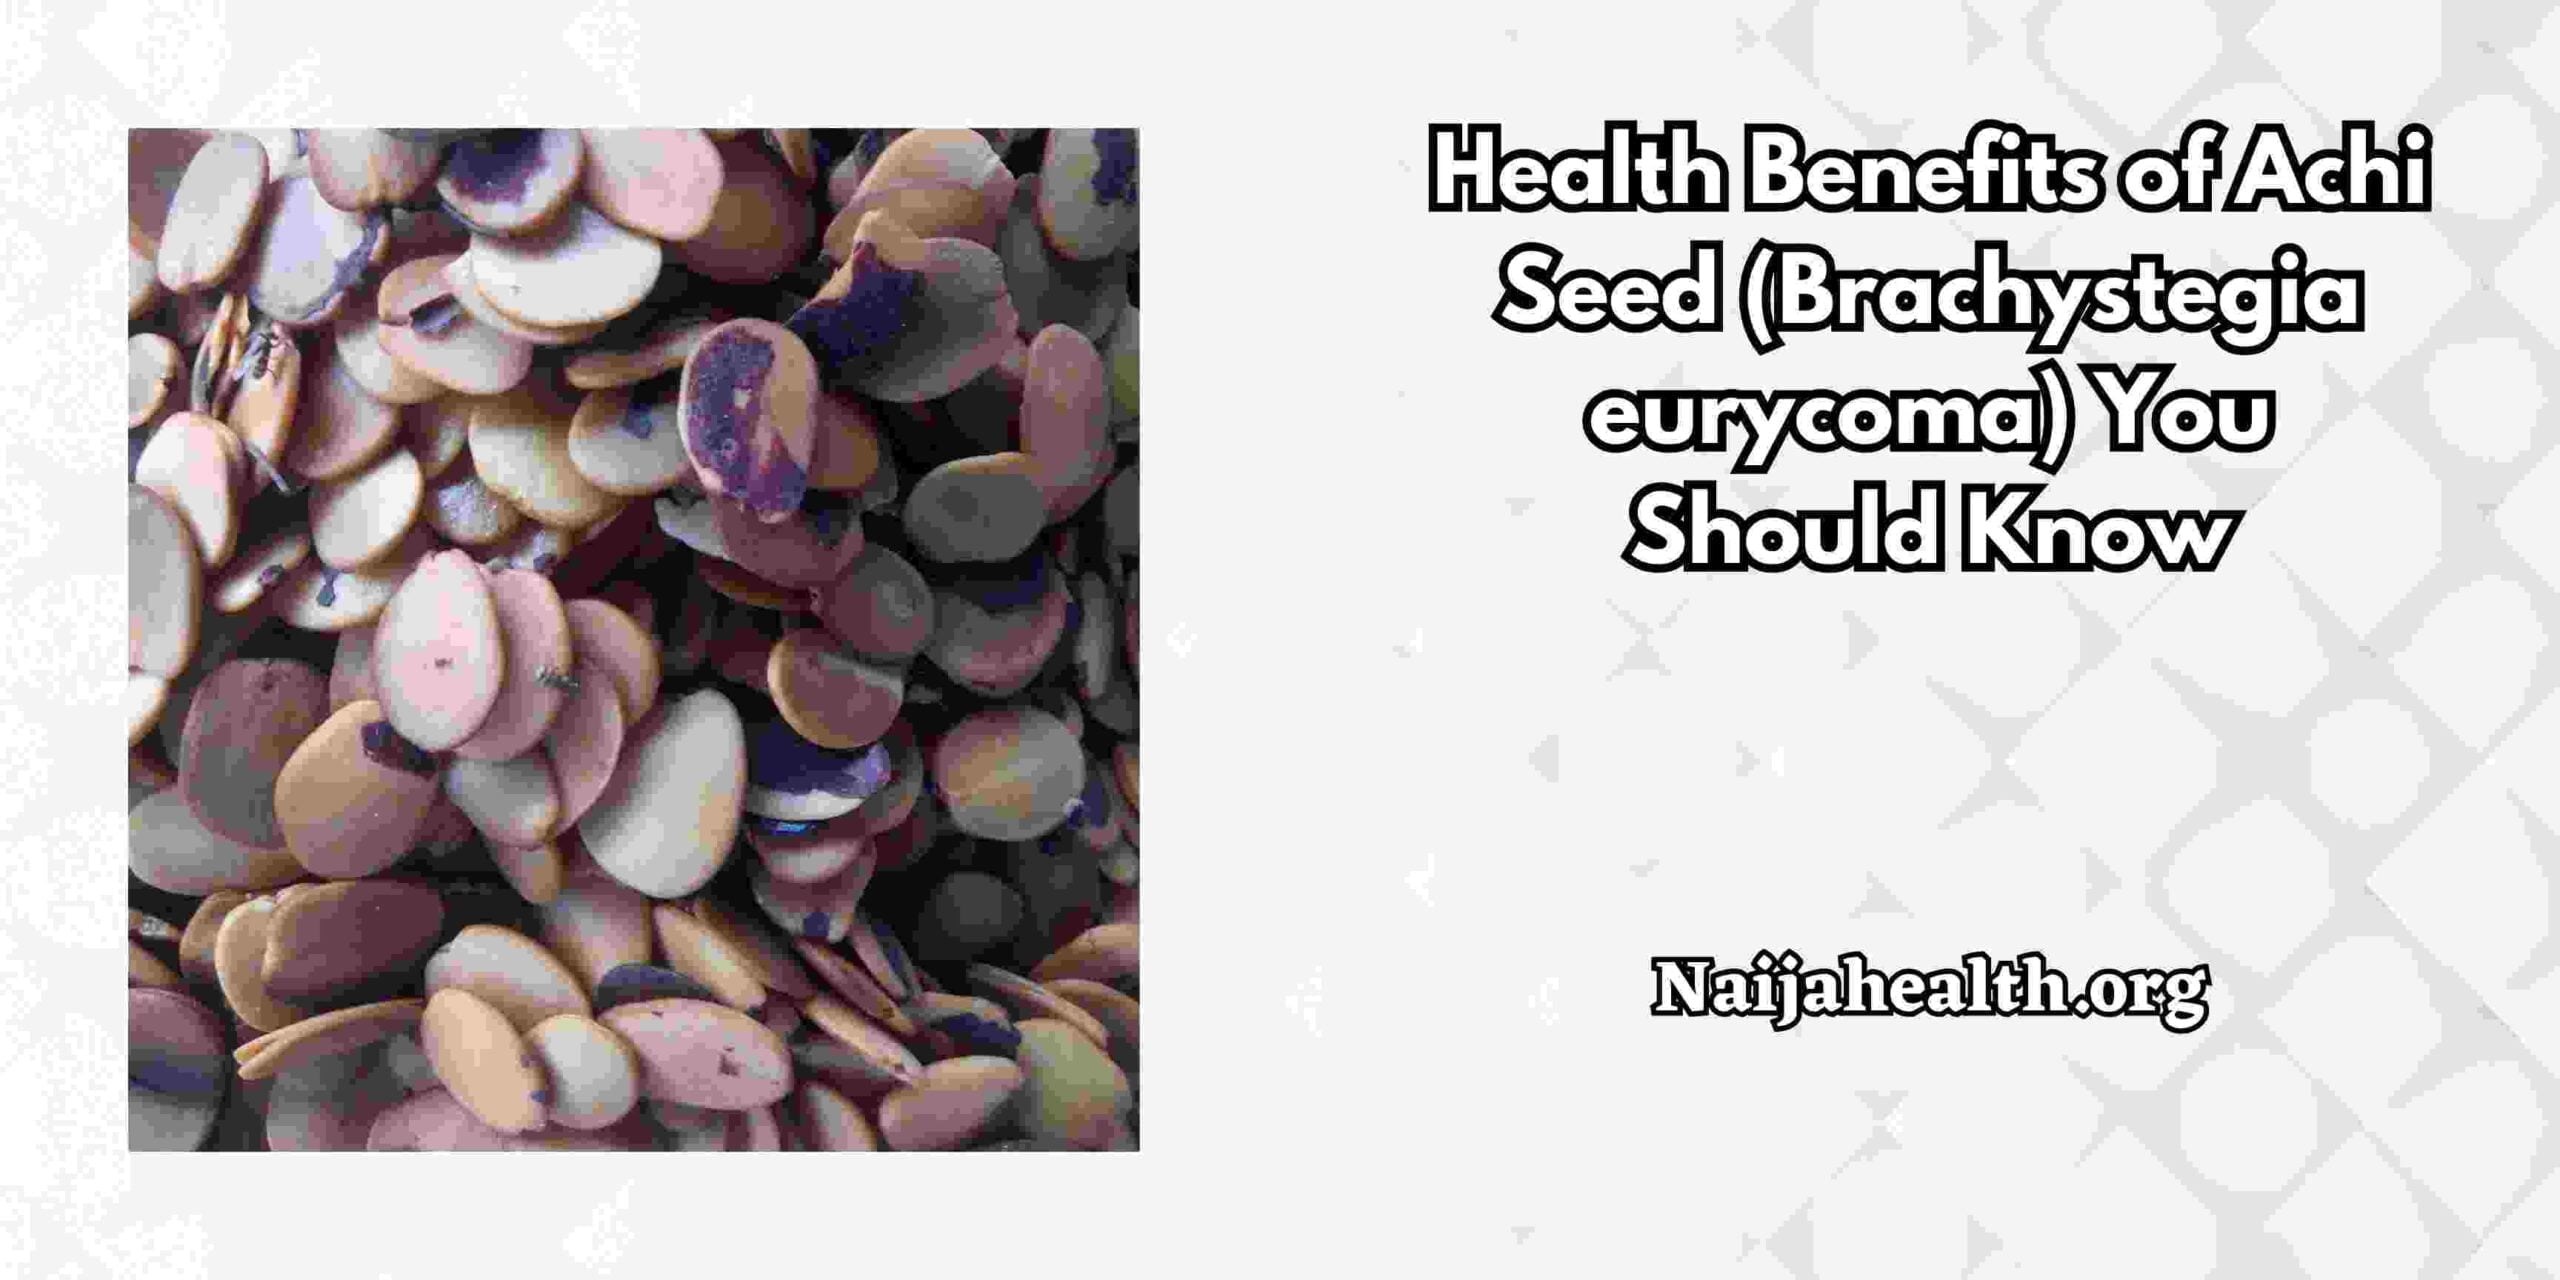 Health Benefits of Achi Seed (Brachystegia eurycoma) You Should Know